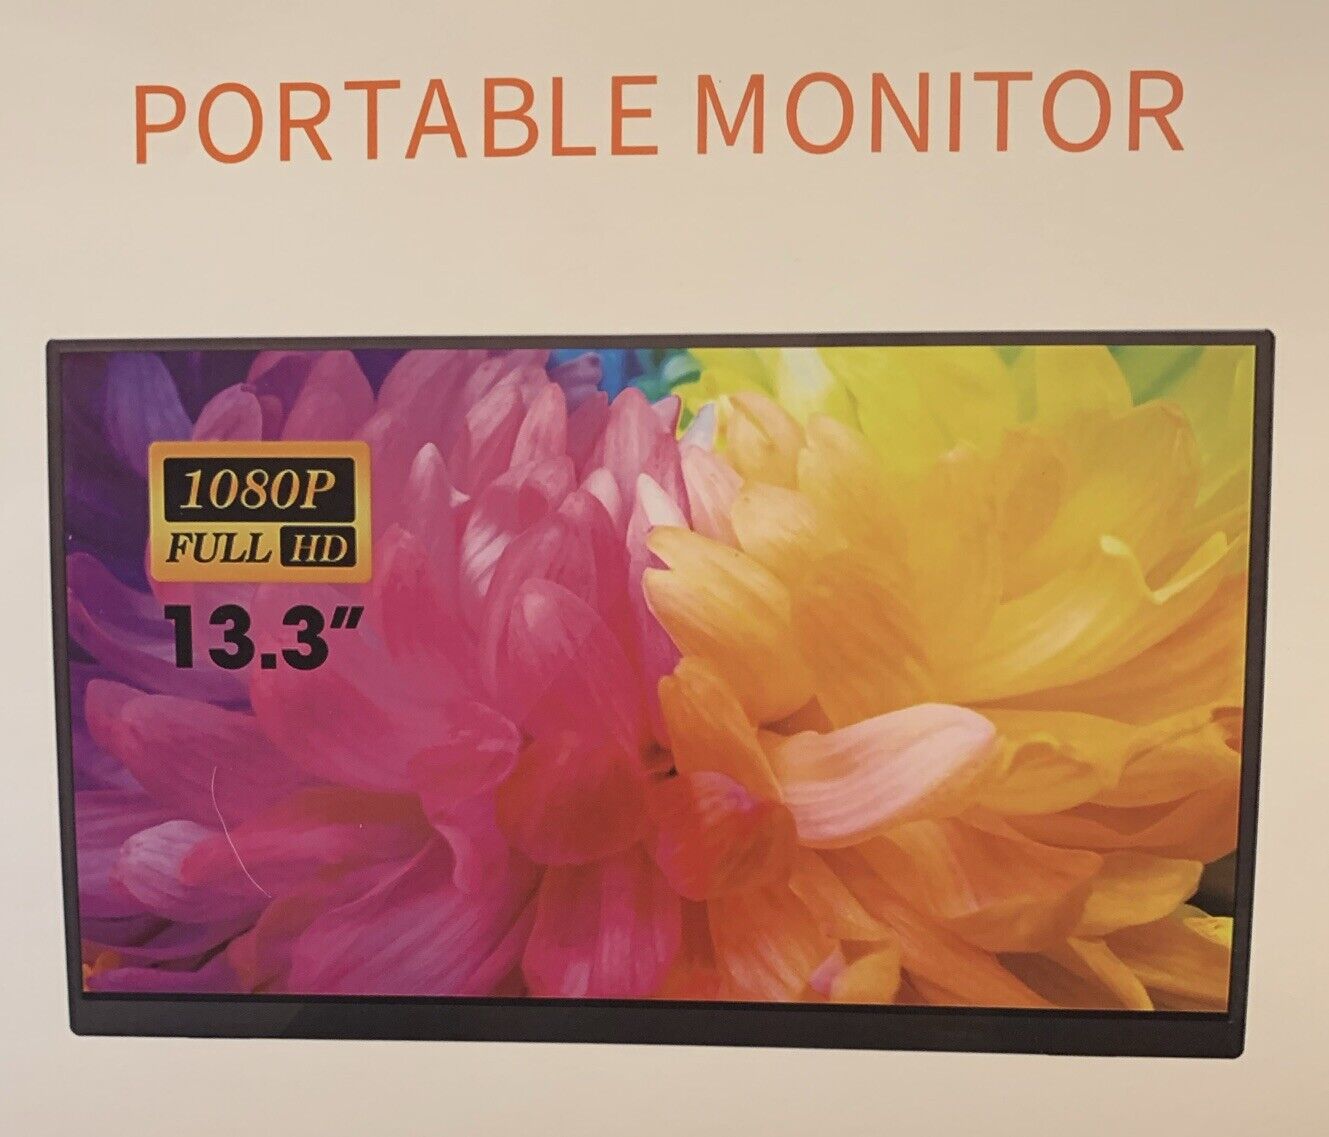 Arzopa 13.3” Full HD Portable Monitor 1080p